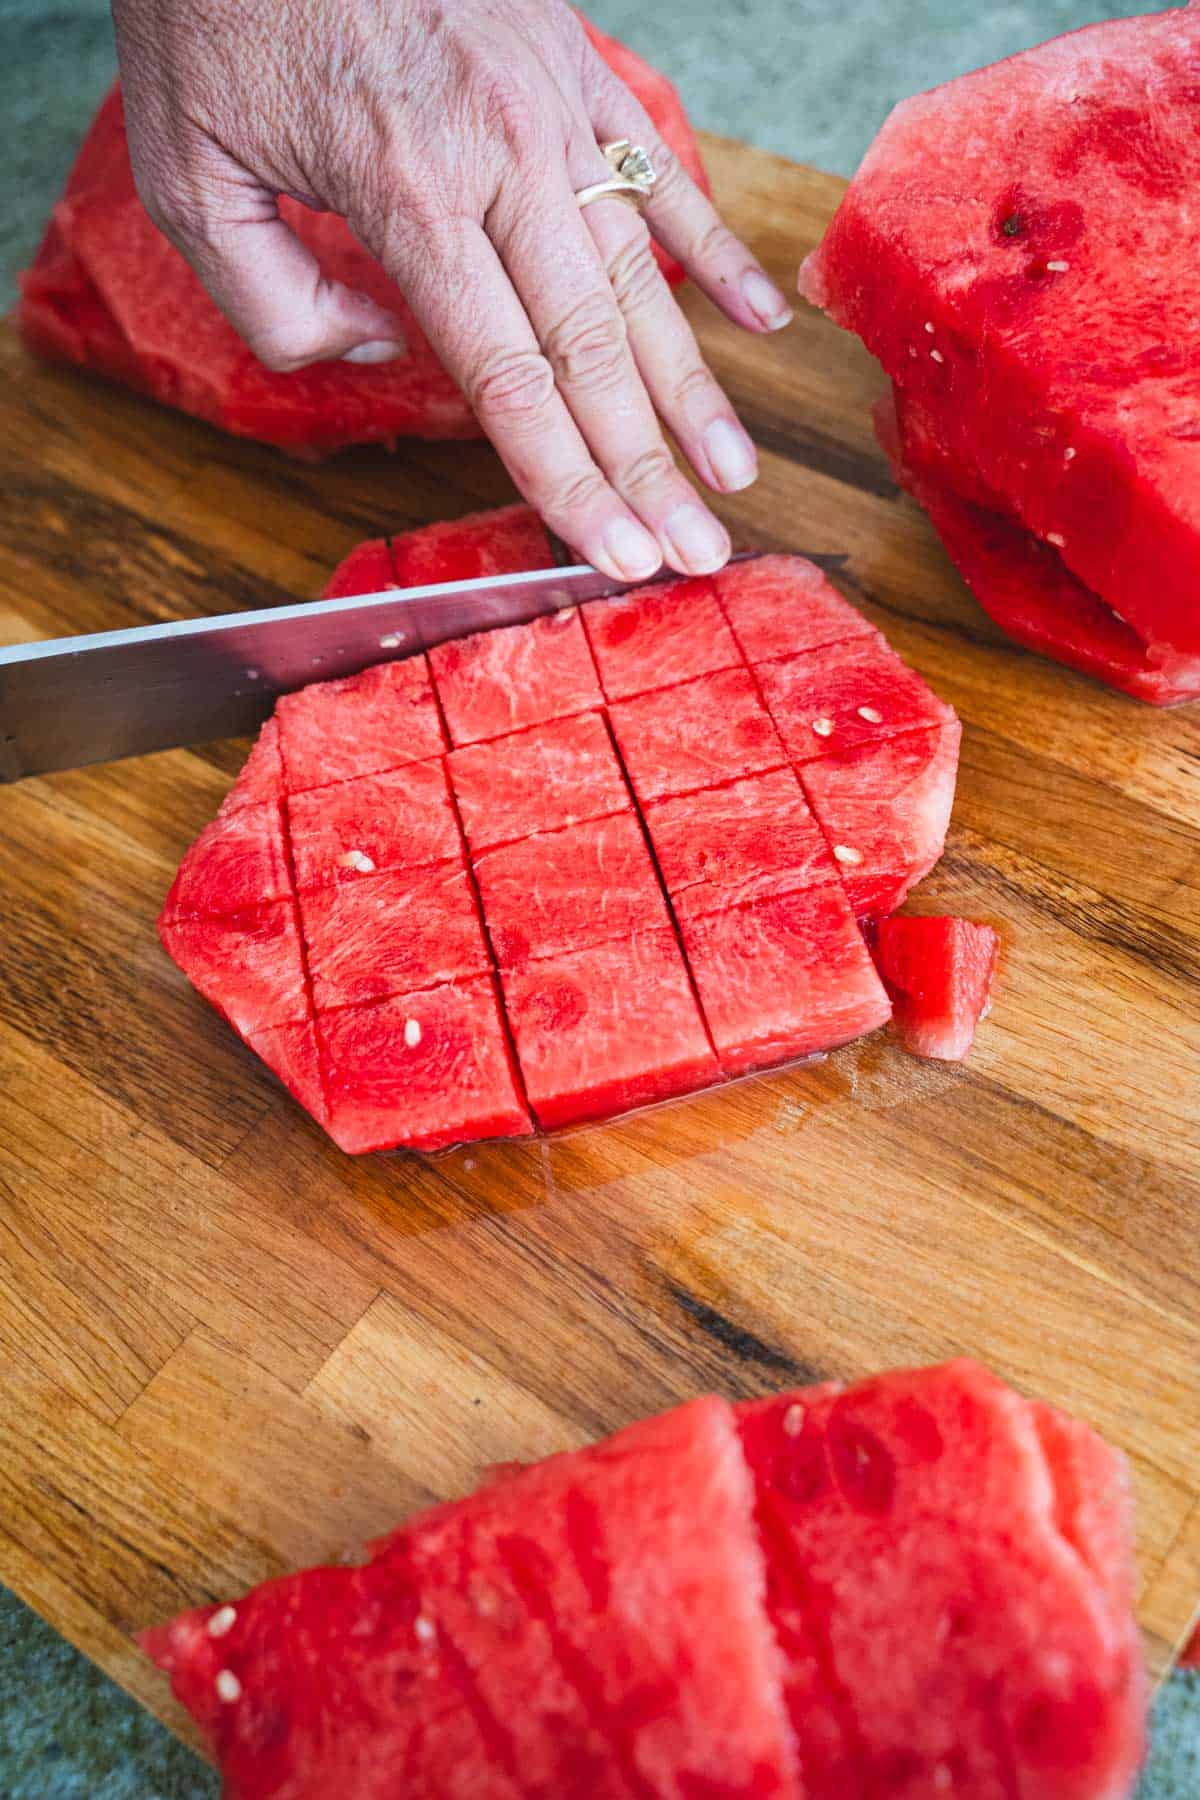 Cutting melon slabs into chunks on cutting board